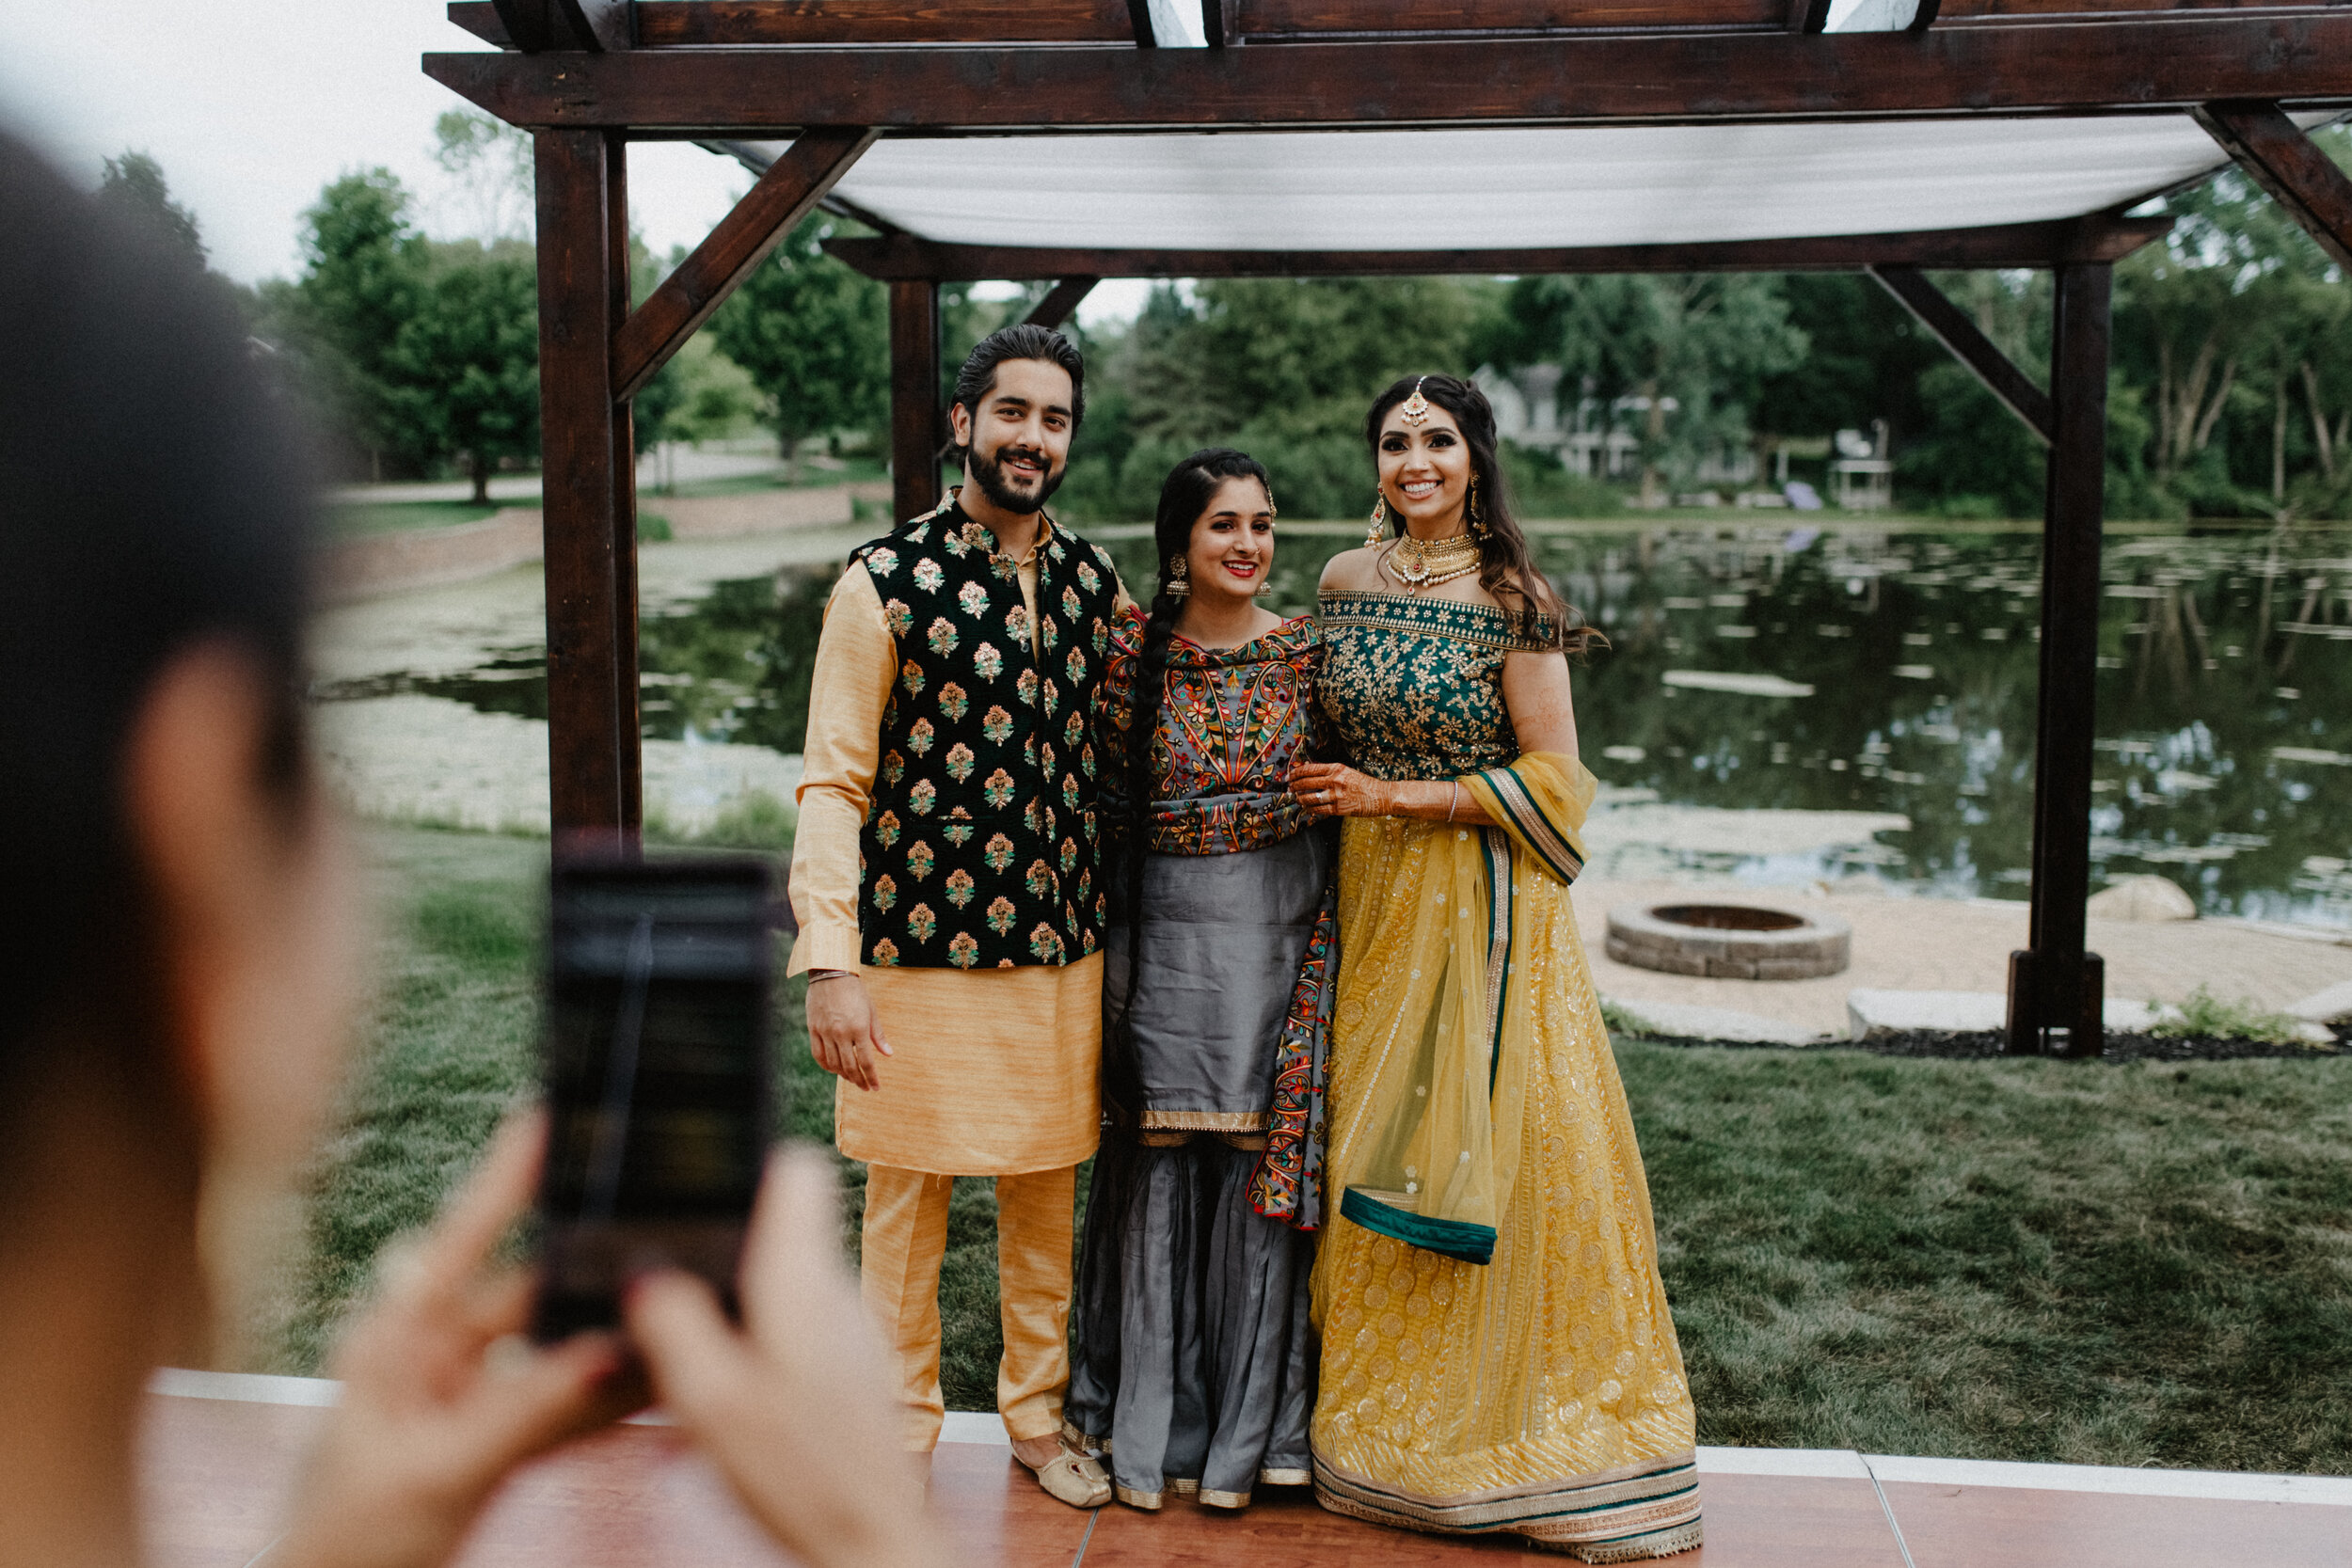 ShadowShinePictures-Sukhi-Balraj-Bains-Kaur-Grand-Rapids-Indian-Wedding-Photography-19.jpg